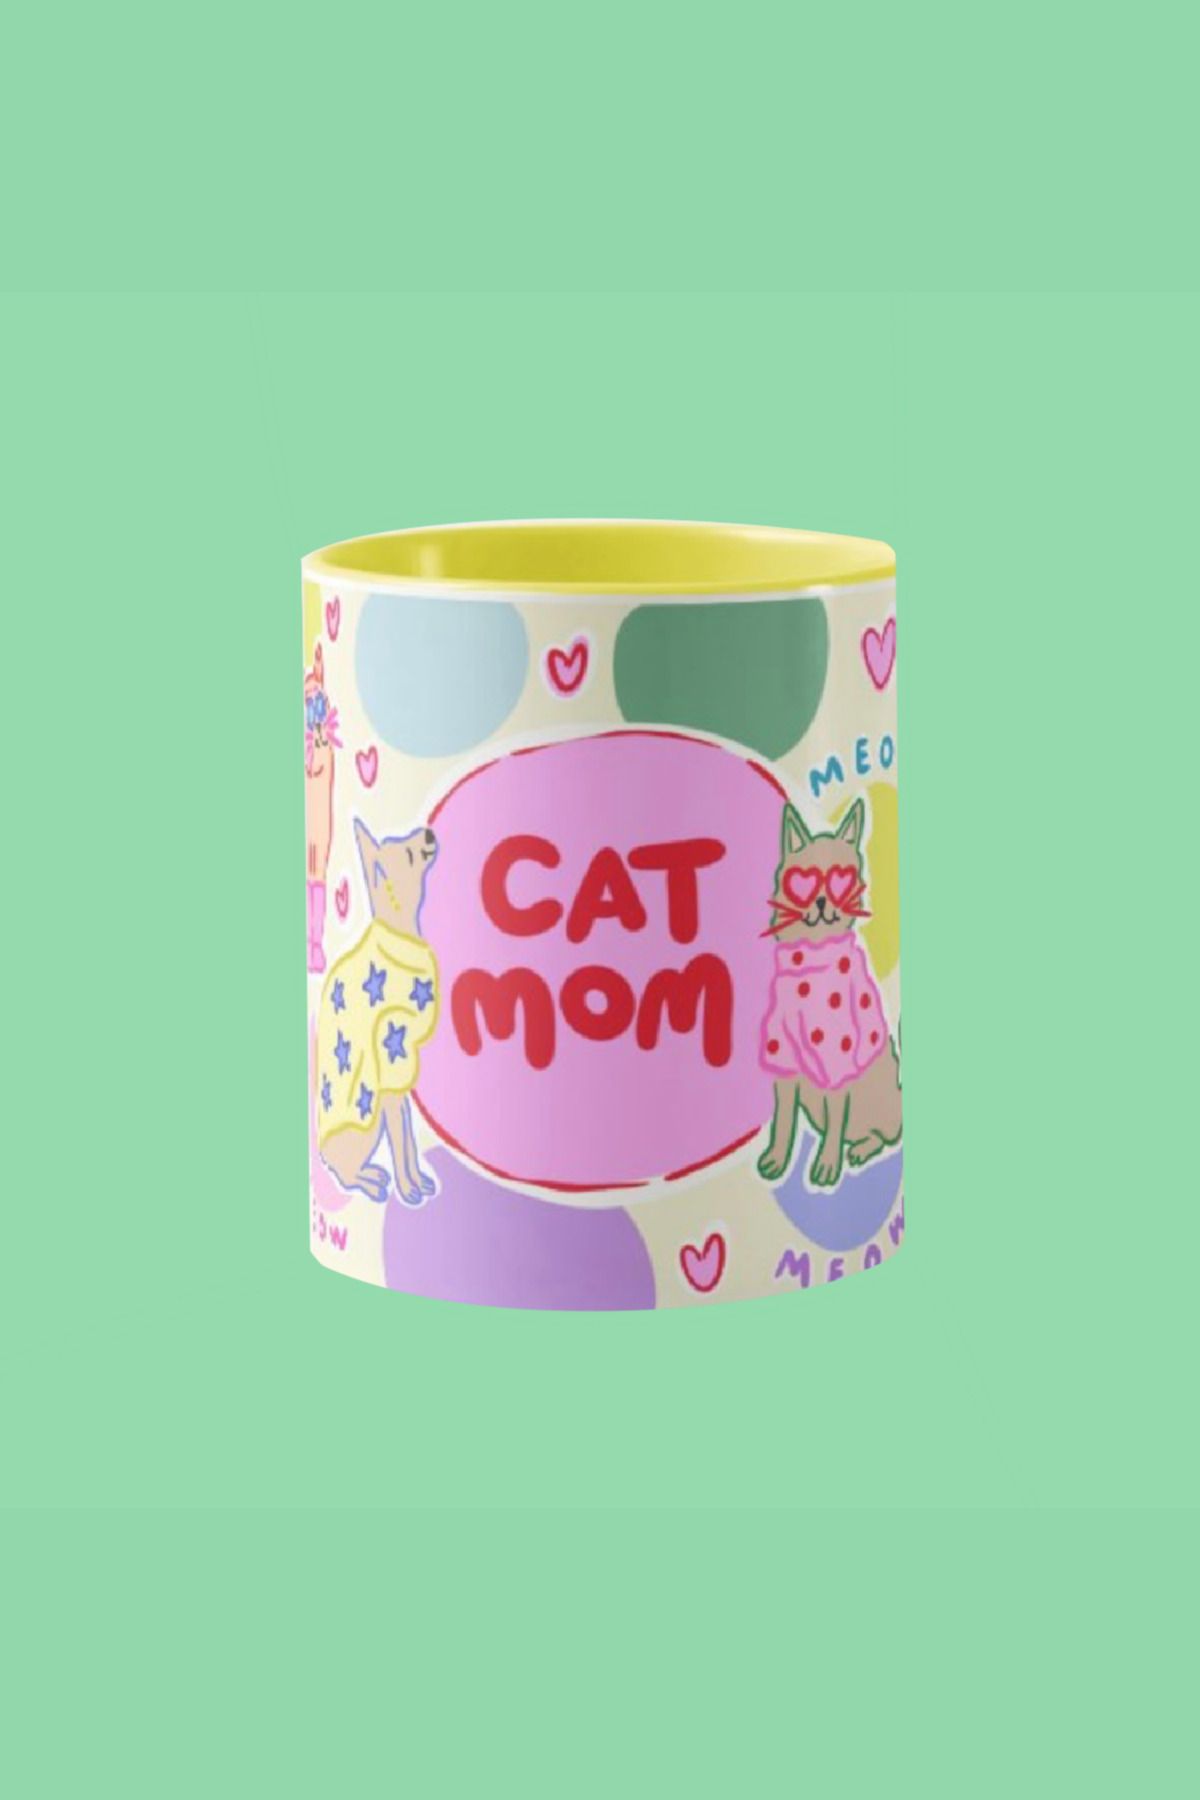 Hello Melody Design Hello Melody kupa serisinden "CAT MOM" Kupa - Özgün tasarımlı dijital baskı kupa 9.5x8 cm